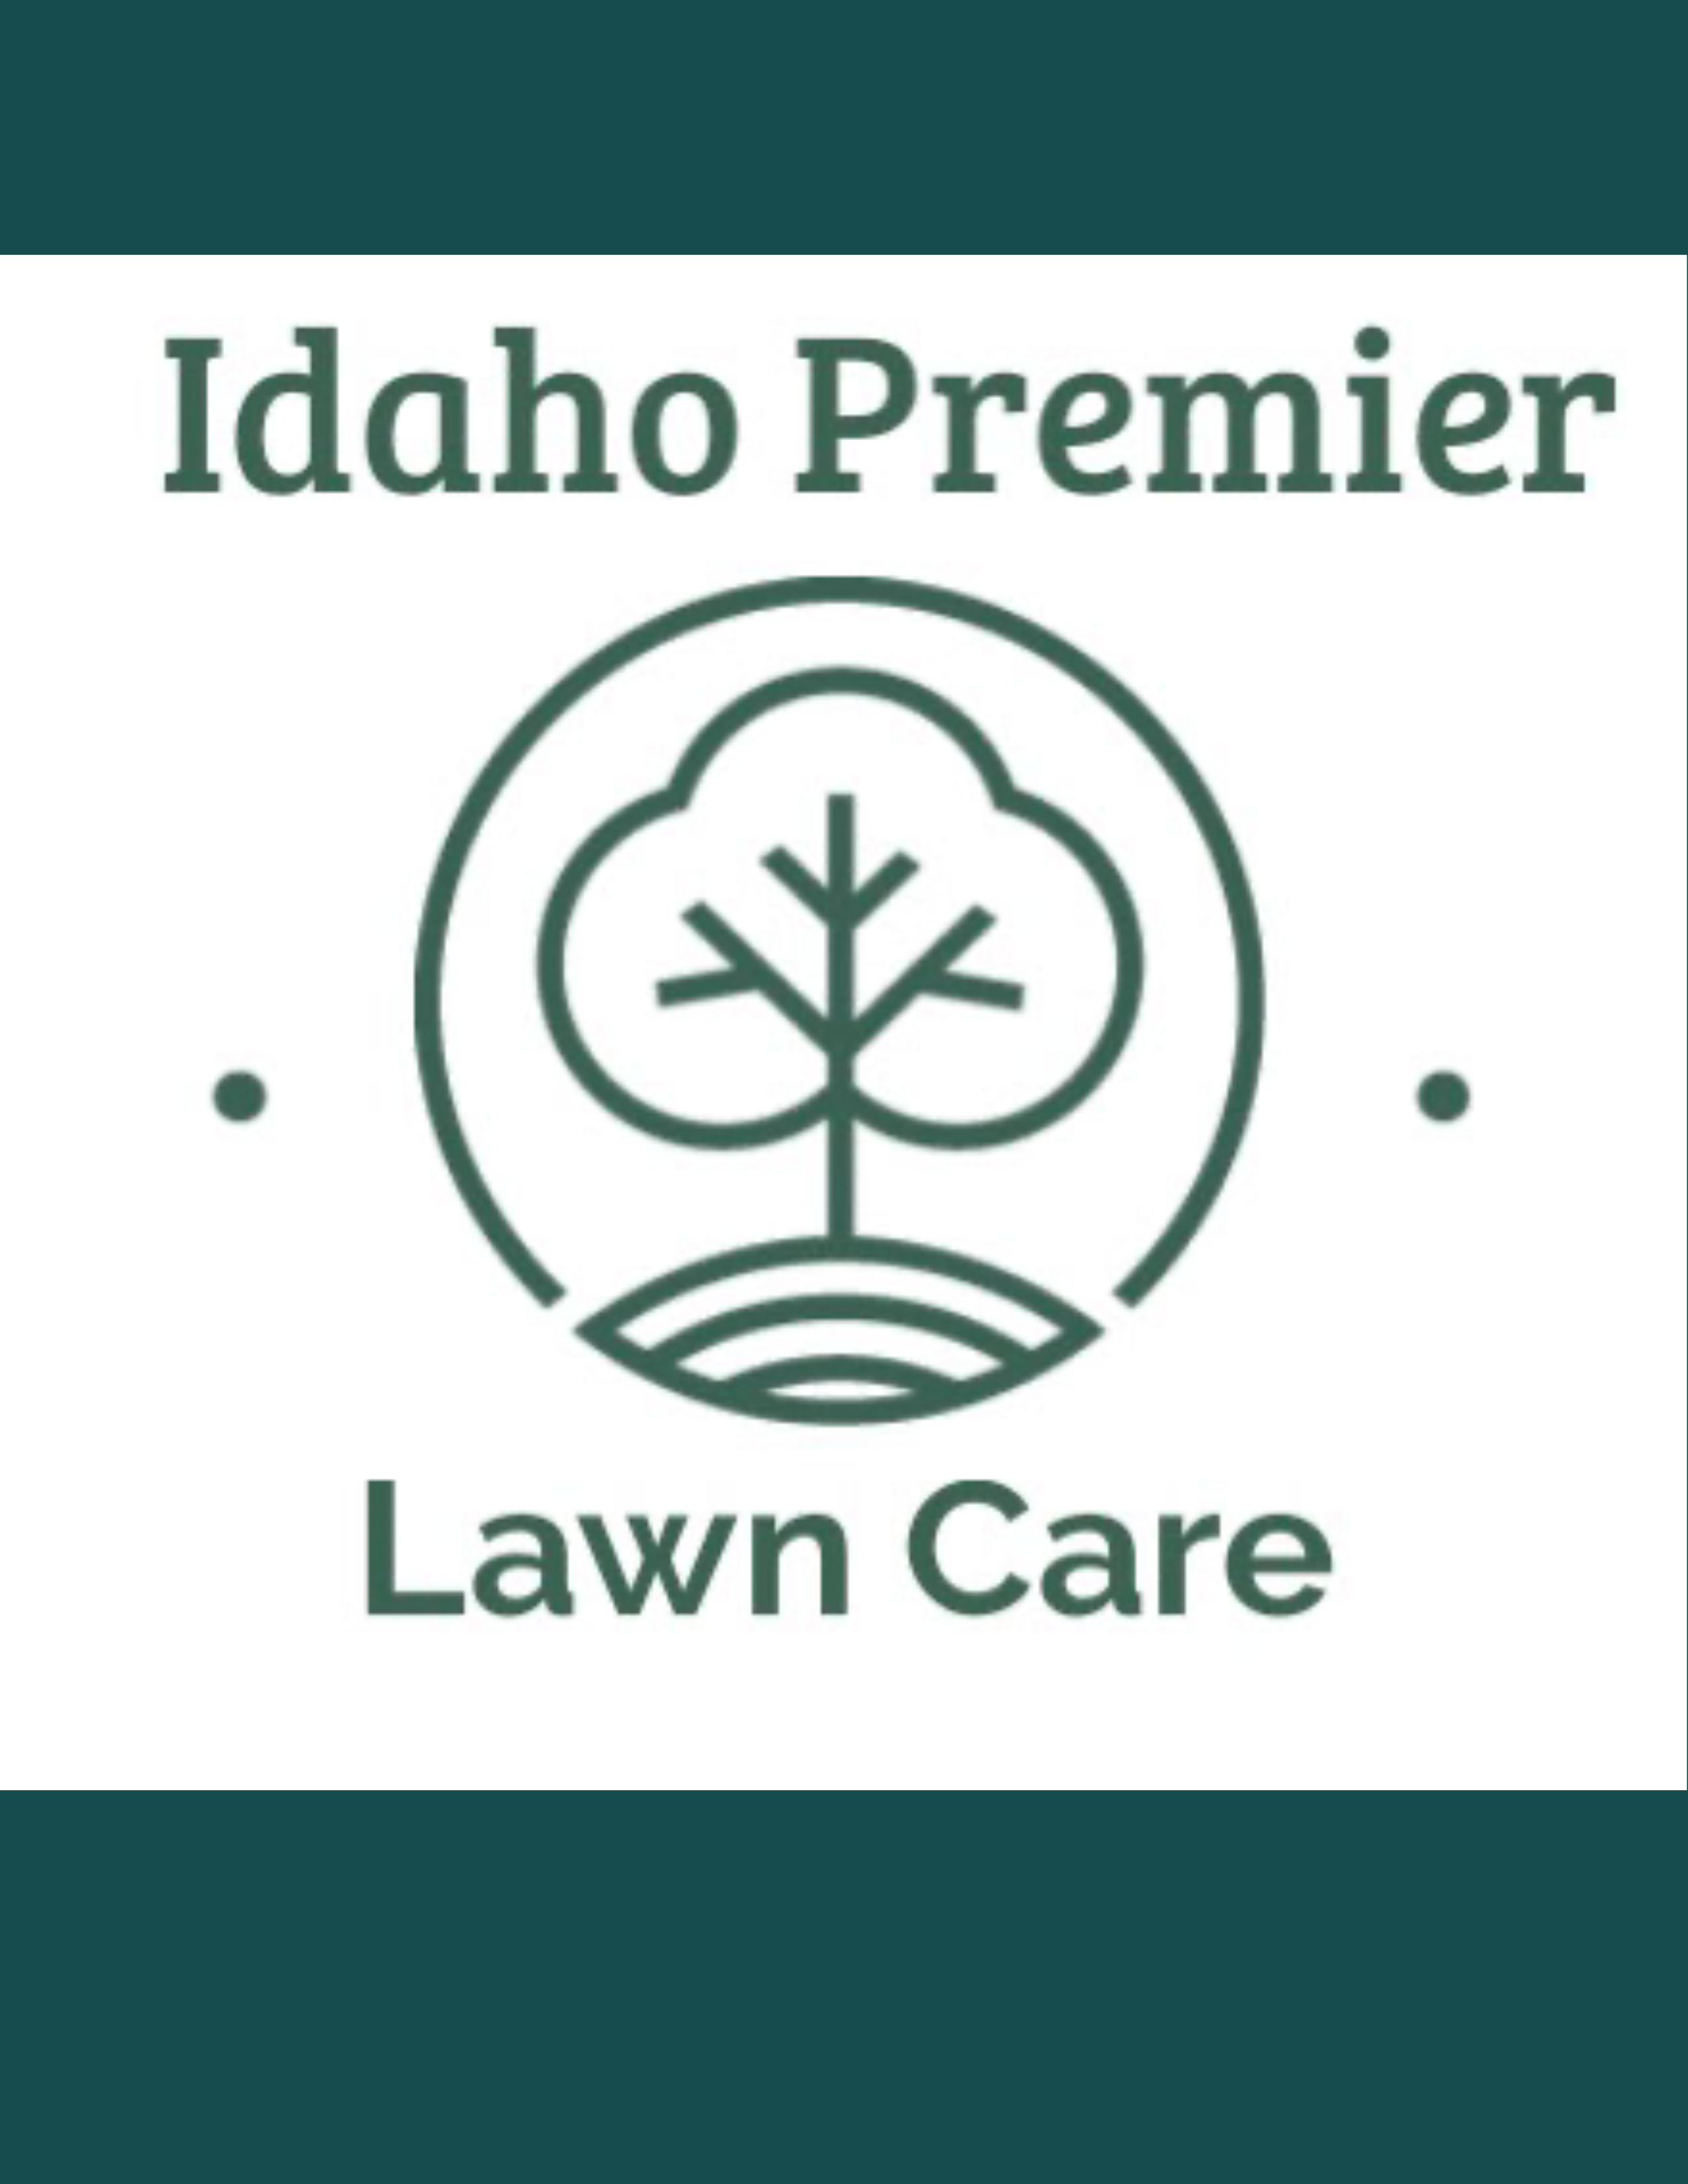 Idaho Premier Lawn Care Logo